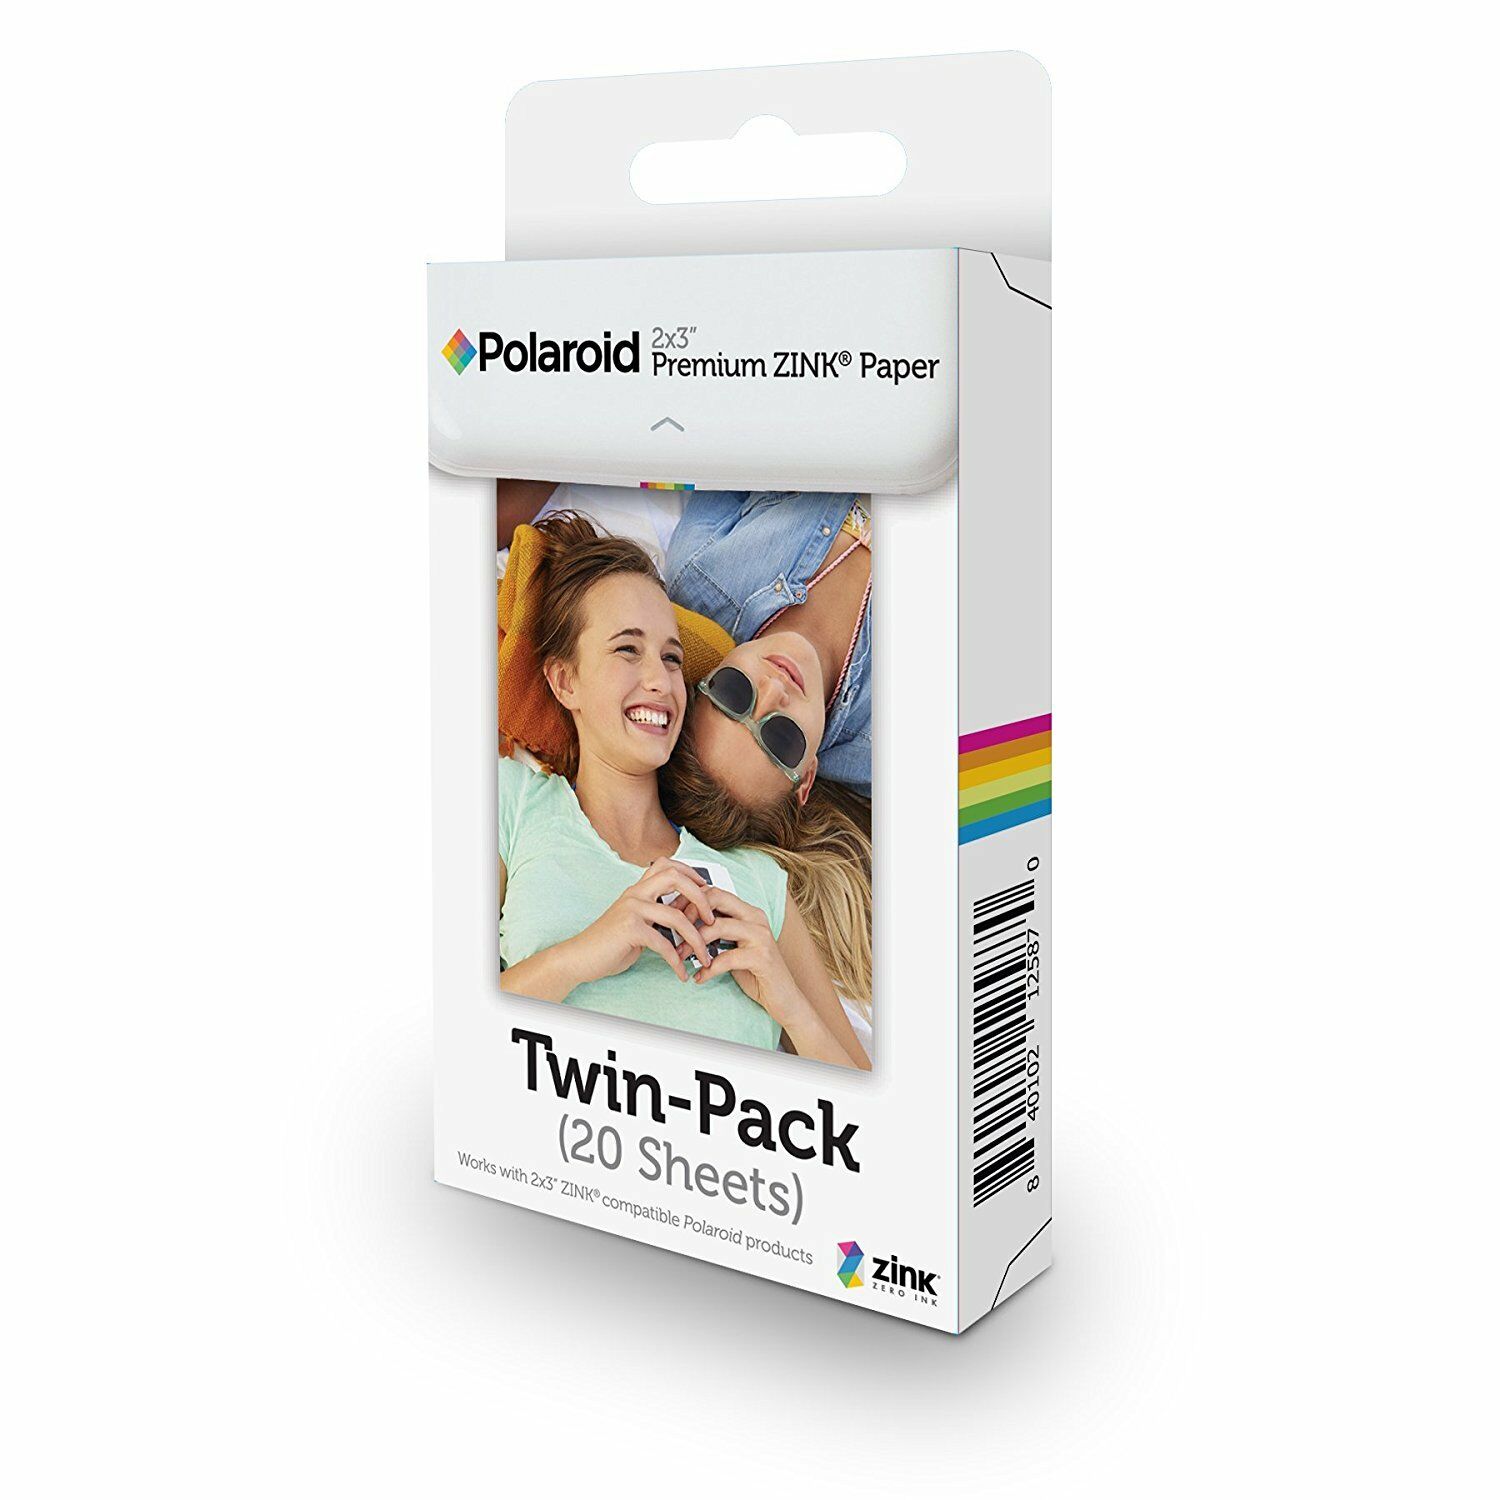 Polaroid Instant Film Zink Media 2x3" 20p